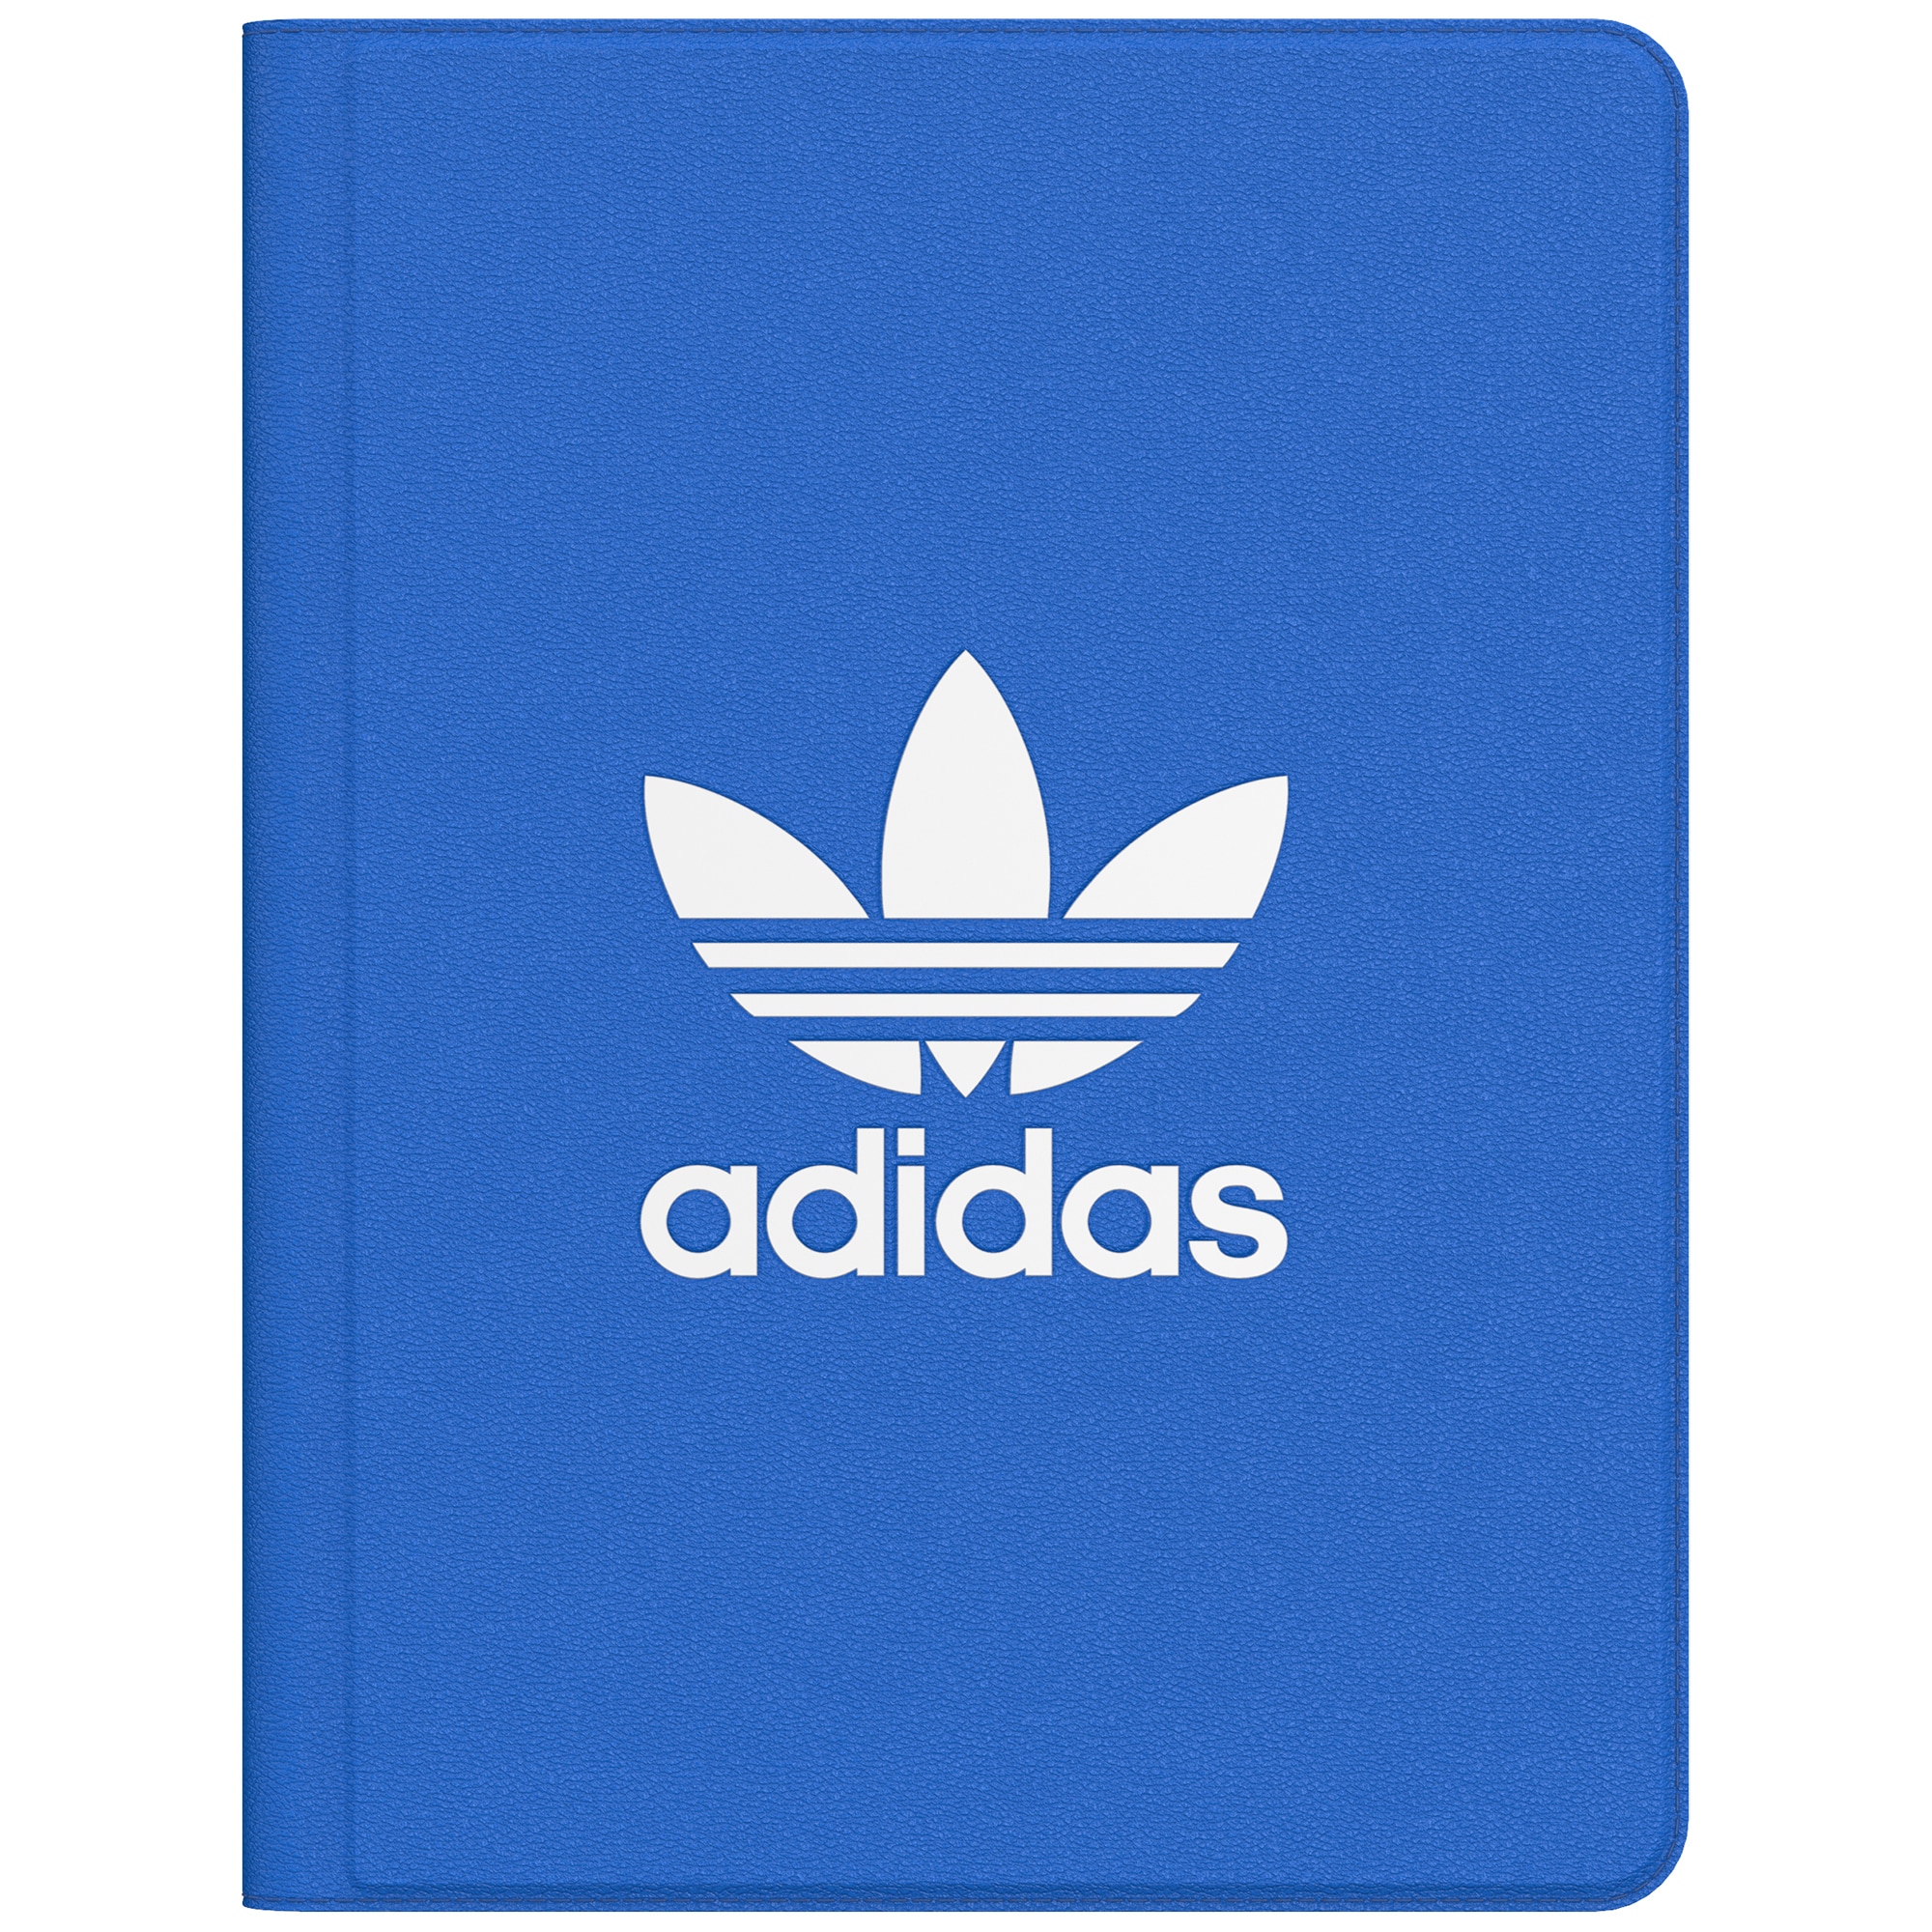 Adidas Originals folio-fodral till iPad mini 4 (blå/vit) - Elgiganten